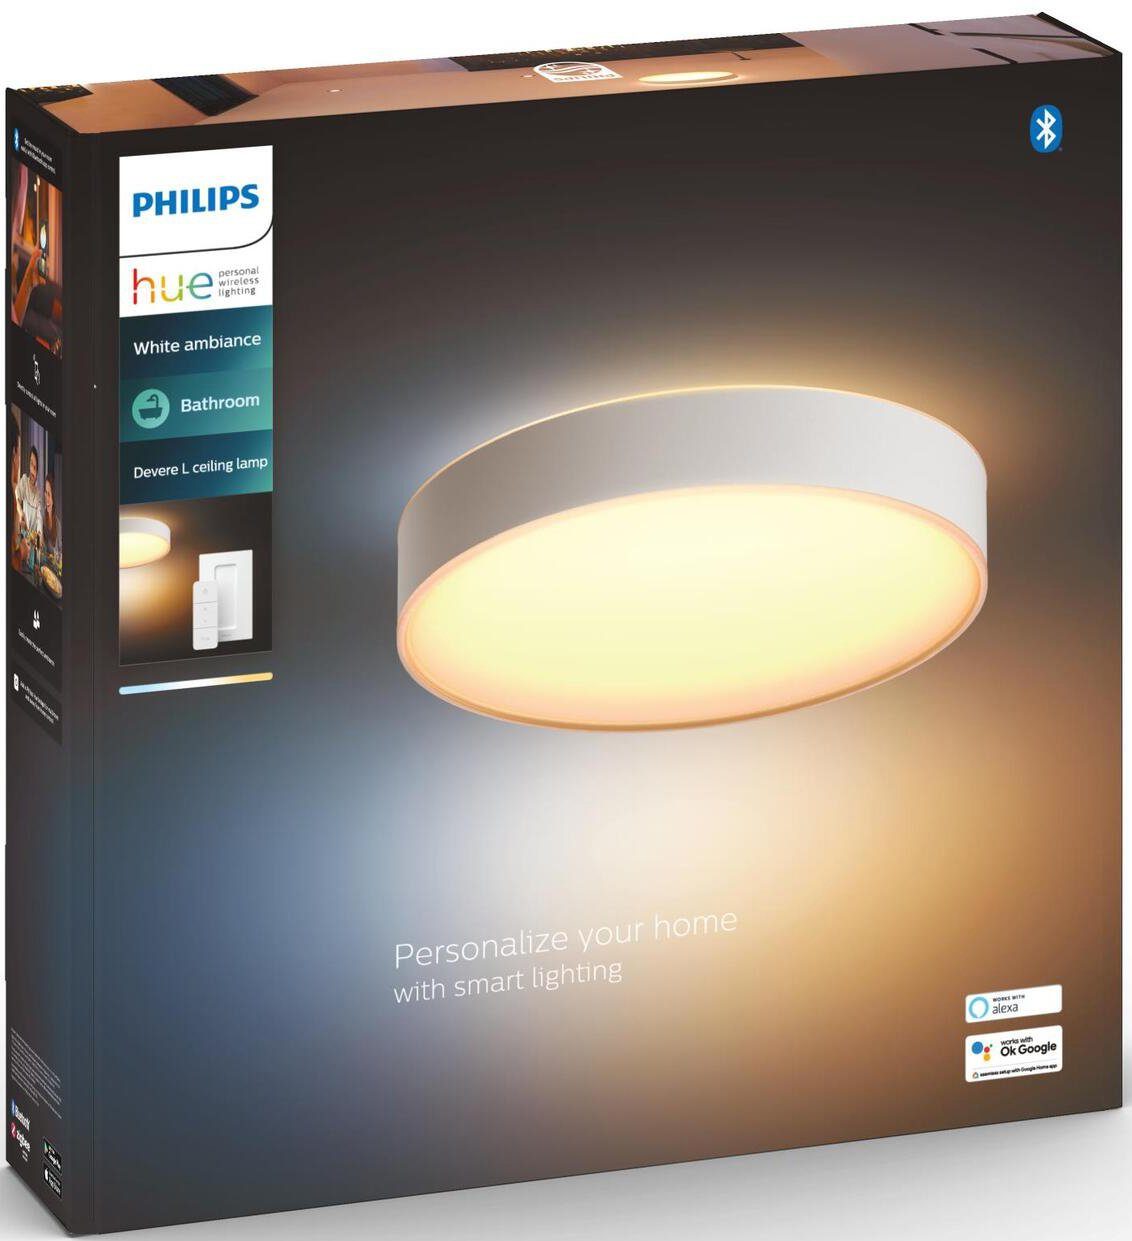 Philips fest Dimmfunktion, LED Deckenleuchte LED Hue Warmweiß Devere, integriert,